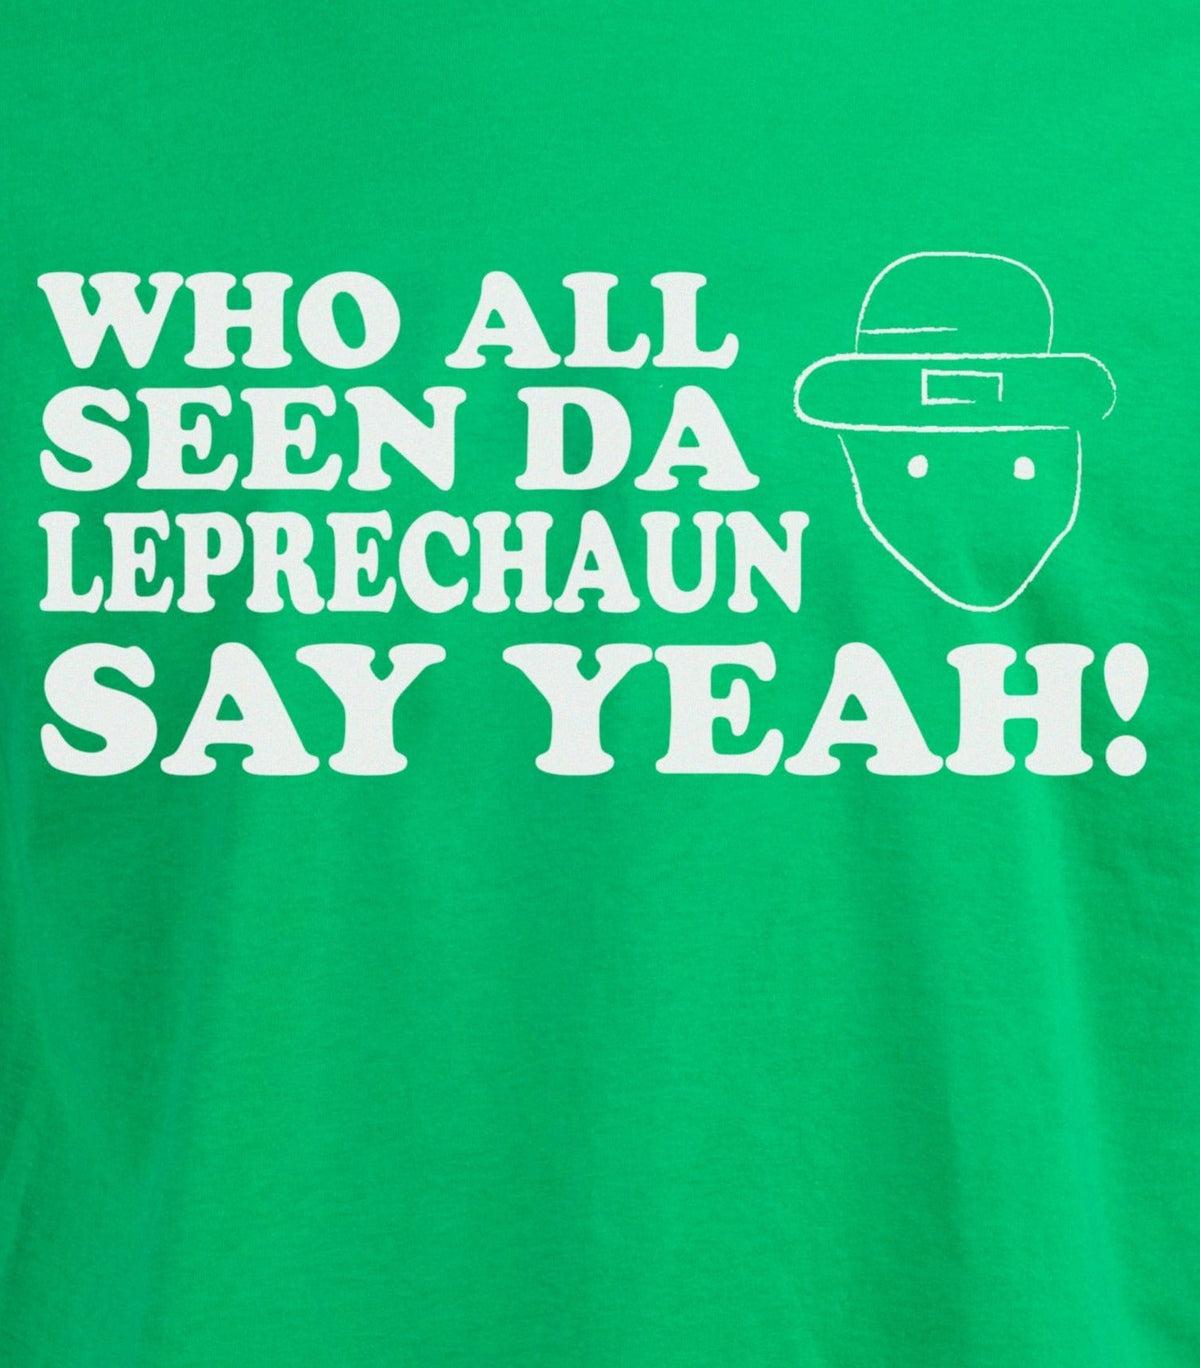 Crichton Leprechaun - St. Patrick's Day Drinking Funny Party T-shirt - Men's/Unisex